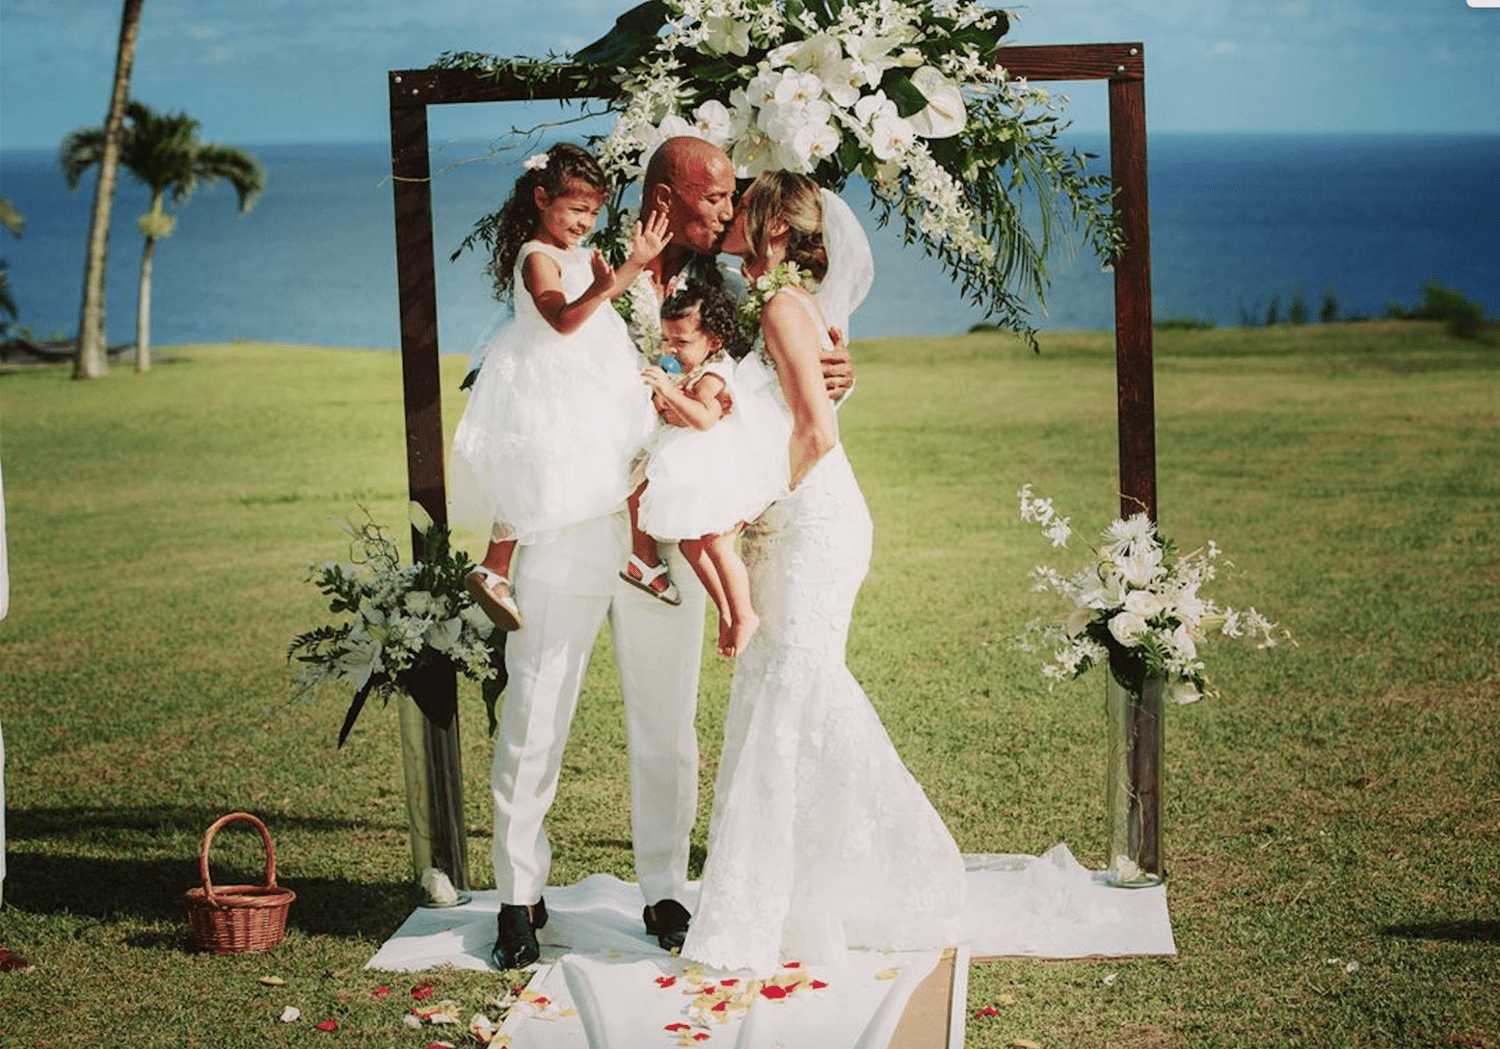 <p>Dwayne Johnson's wedding (Source: People)</p>